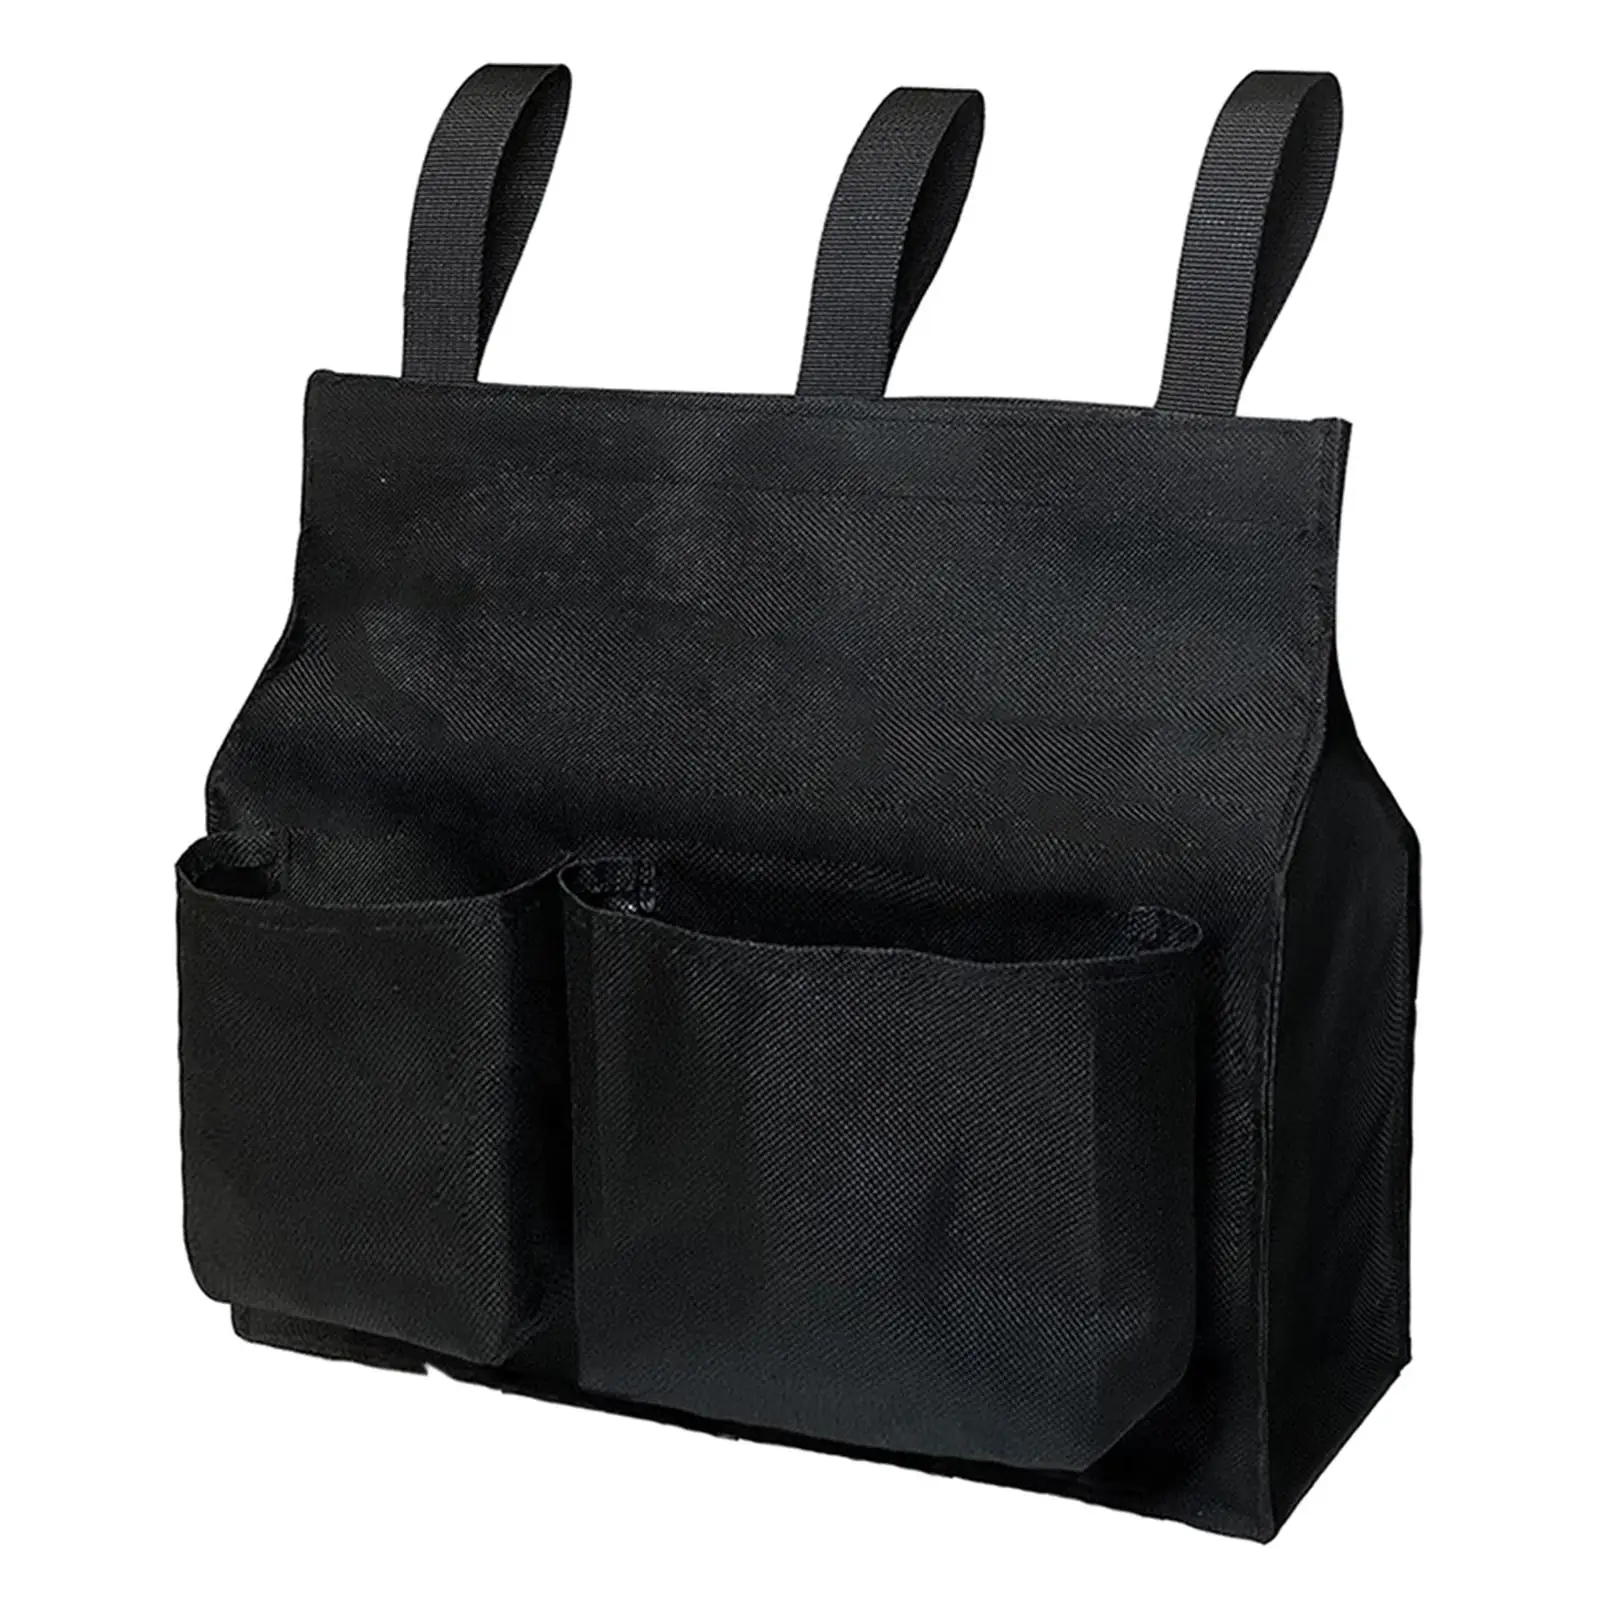 Softball Umpire Ball Bag Durable Quality Extra Large Black Oxford Fabric Referee